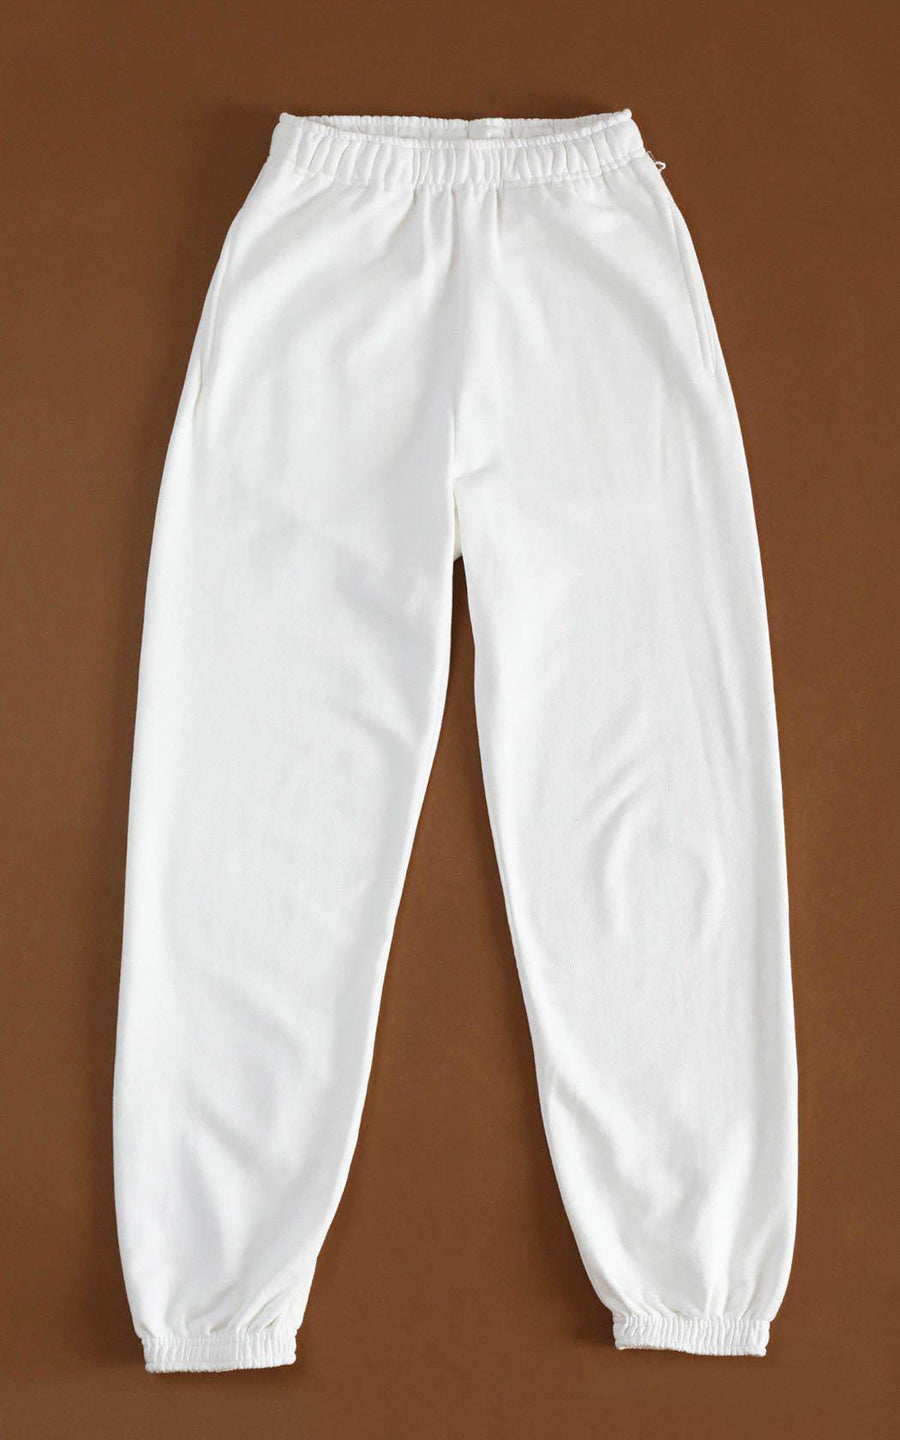 Frankie 100% Organic Cotton Sweatpants - WHITE M, XXL